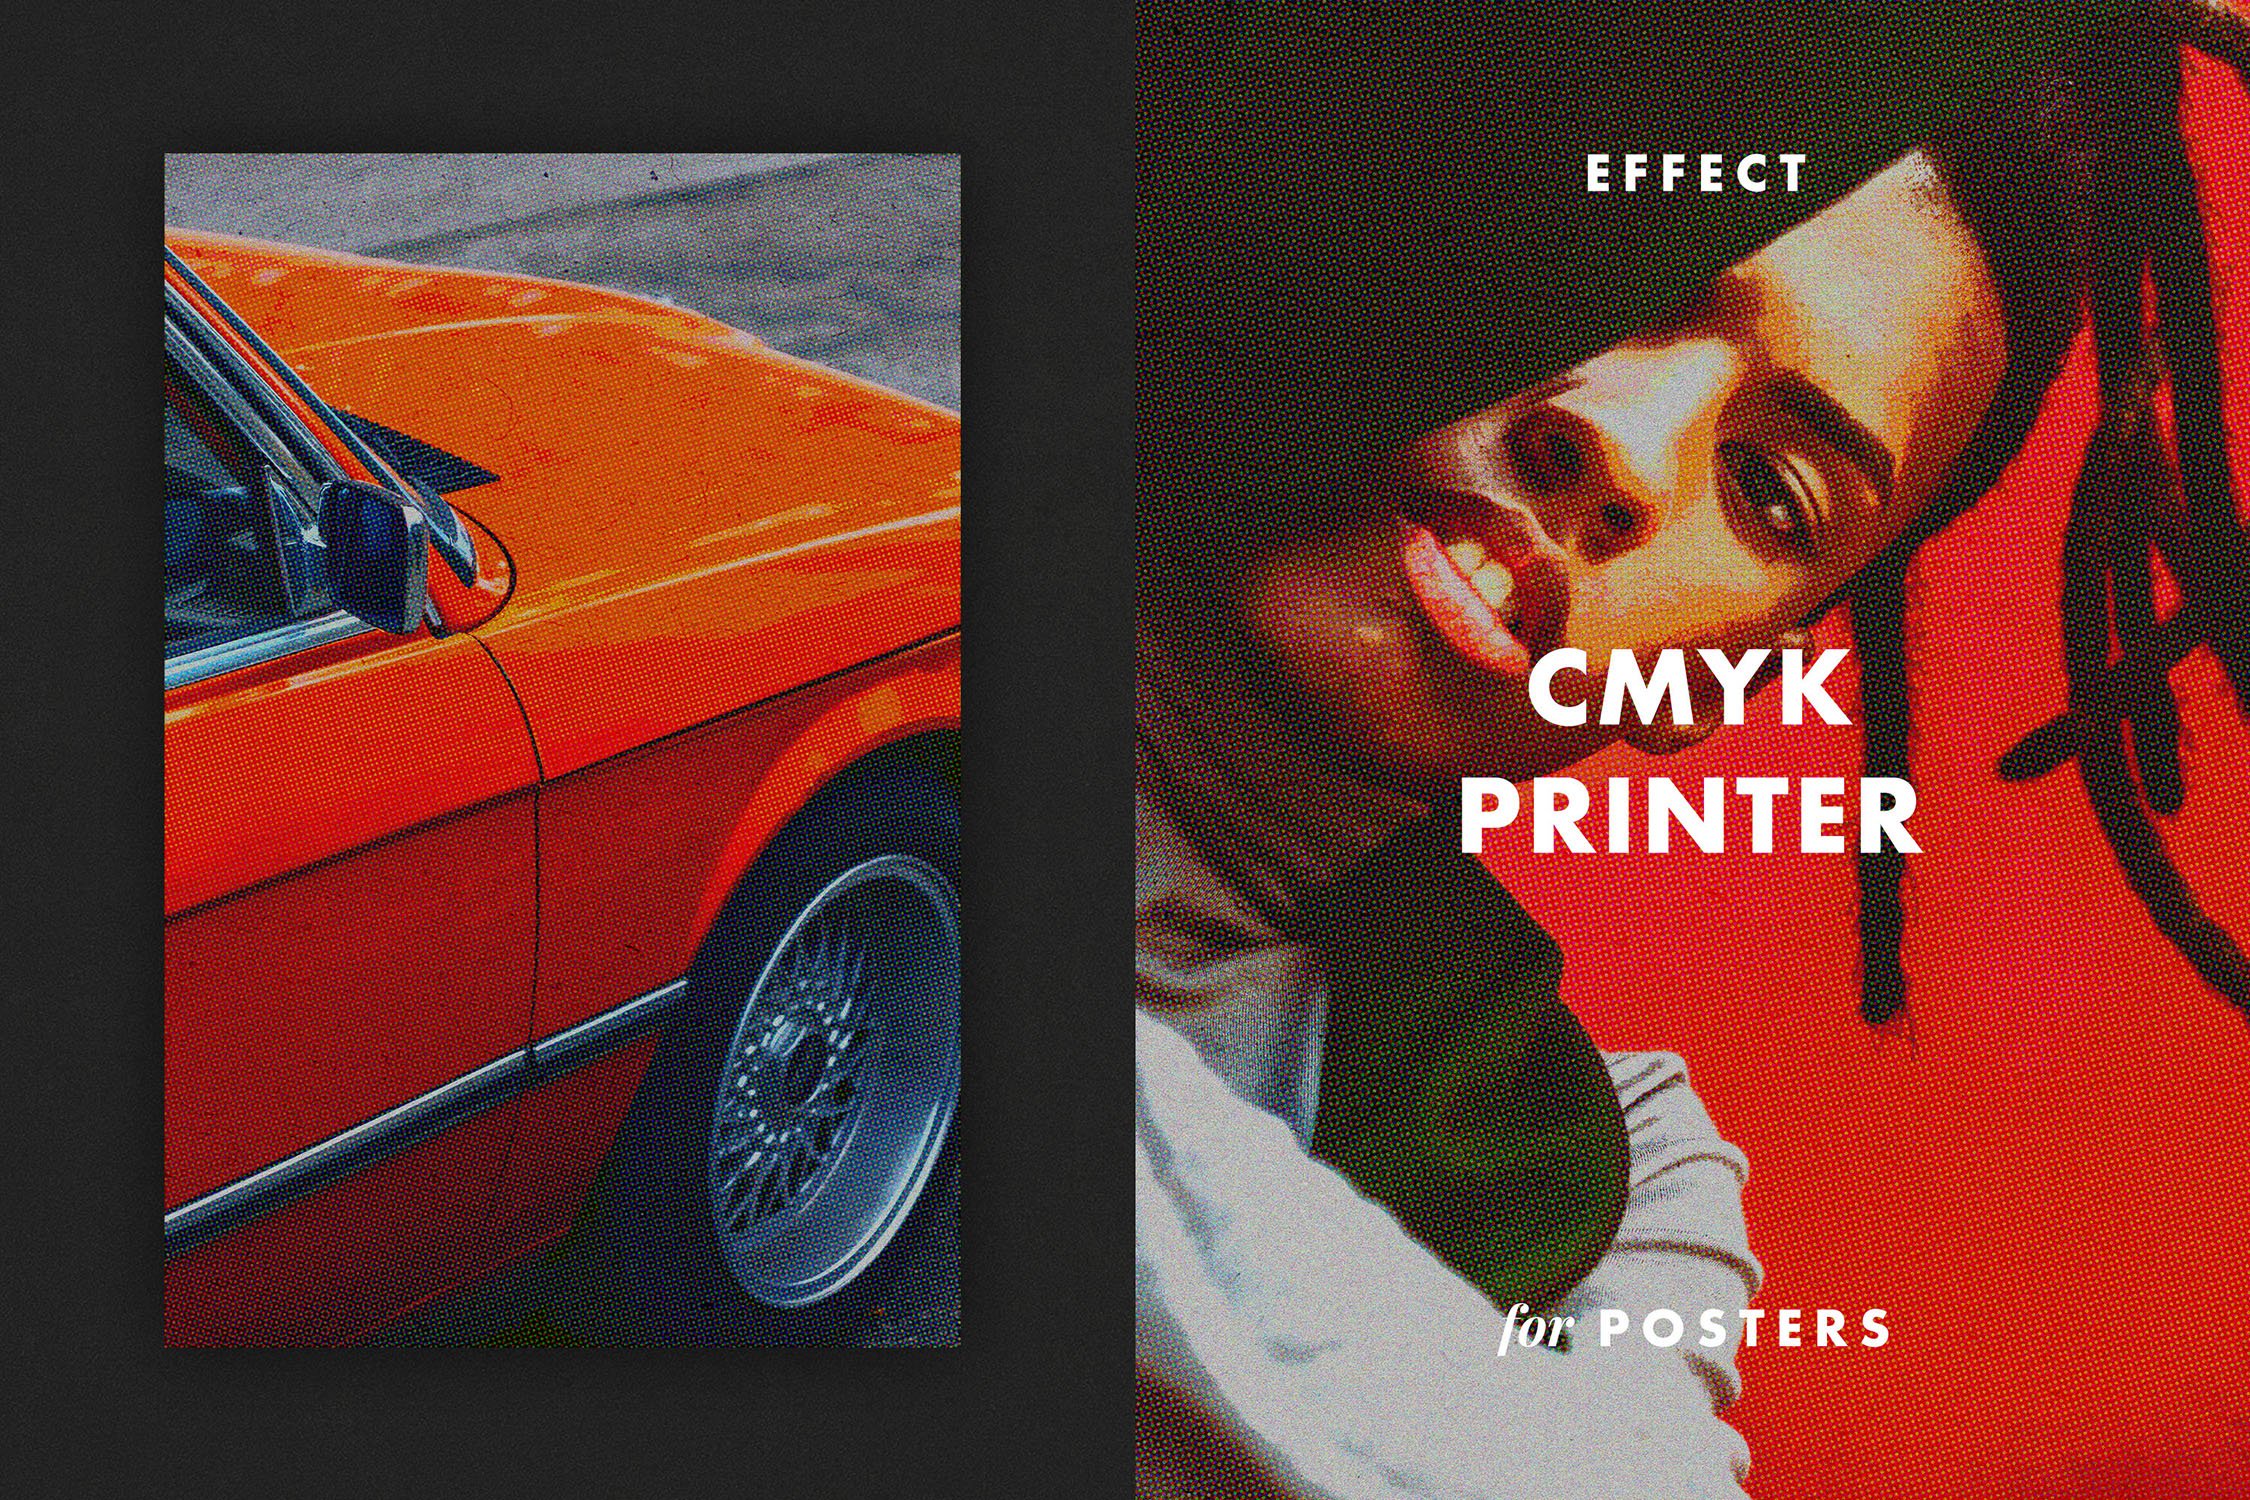 CMYK Printer Effect for Posterscover image.